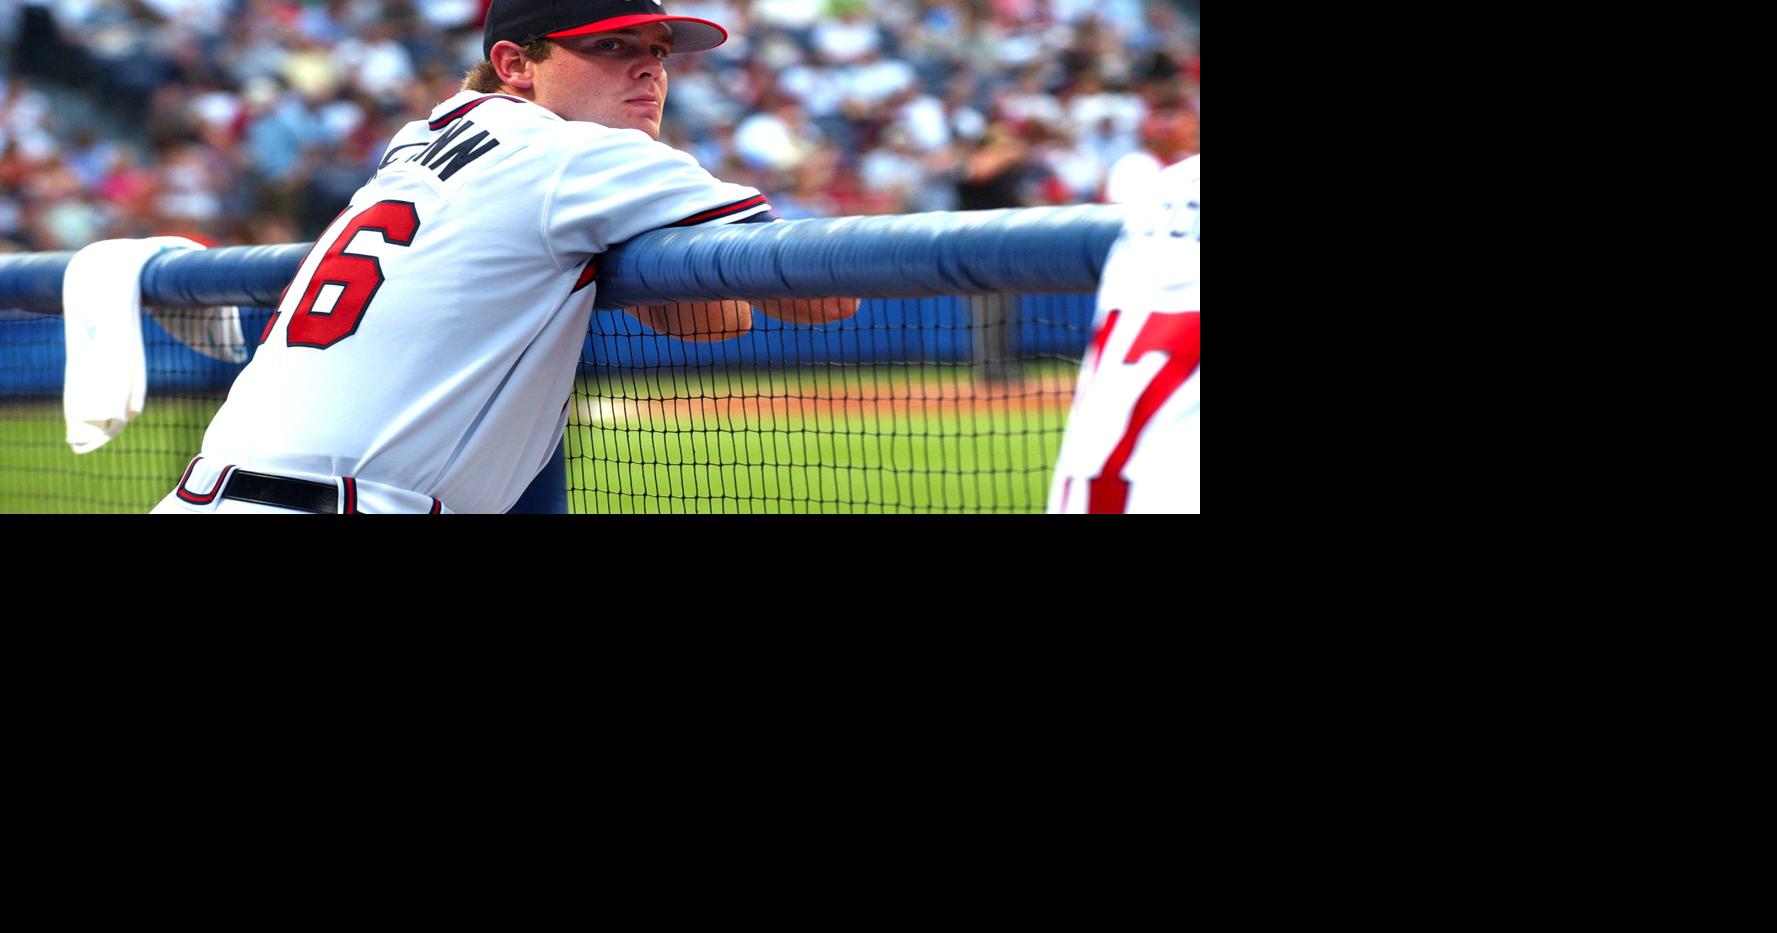 PHOTO FLASHBACK: Brian McCann's 2005 Atlanta Braves debut, Sports